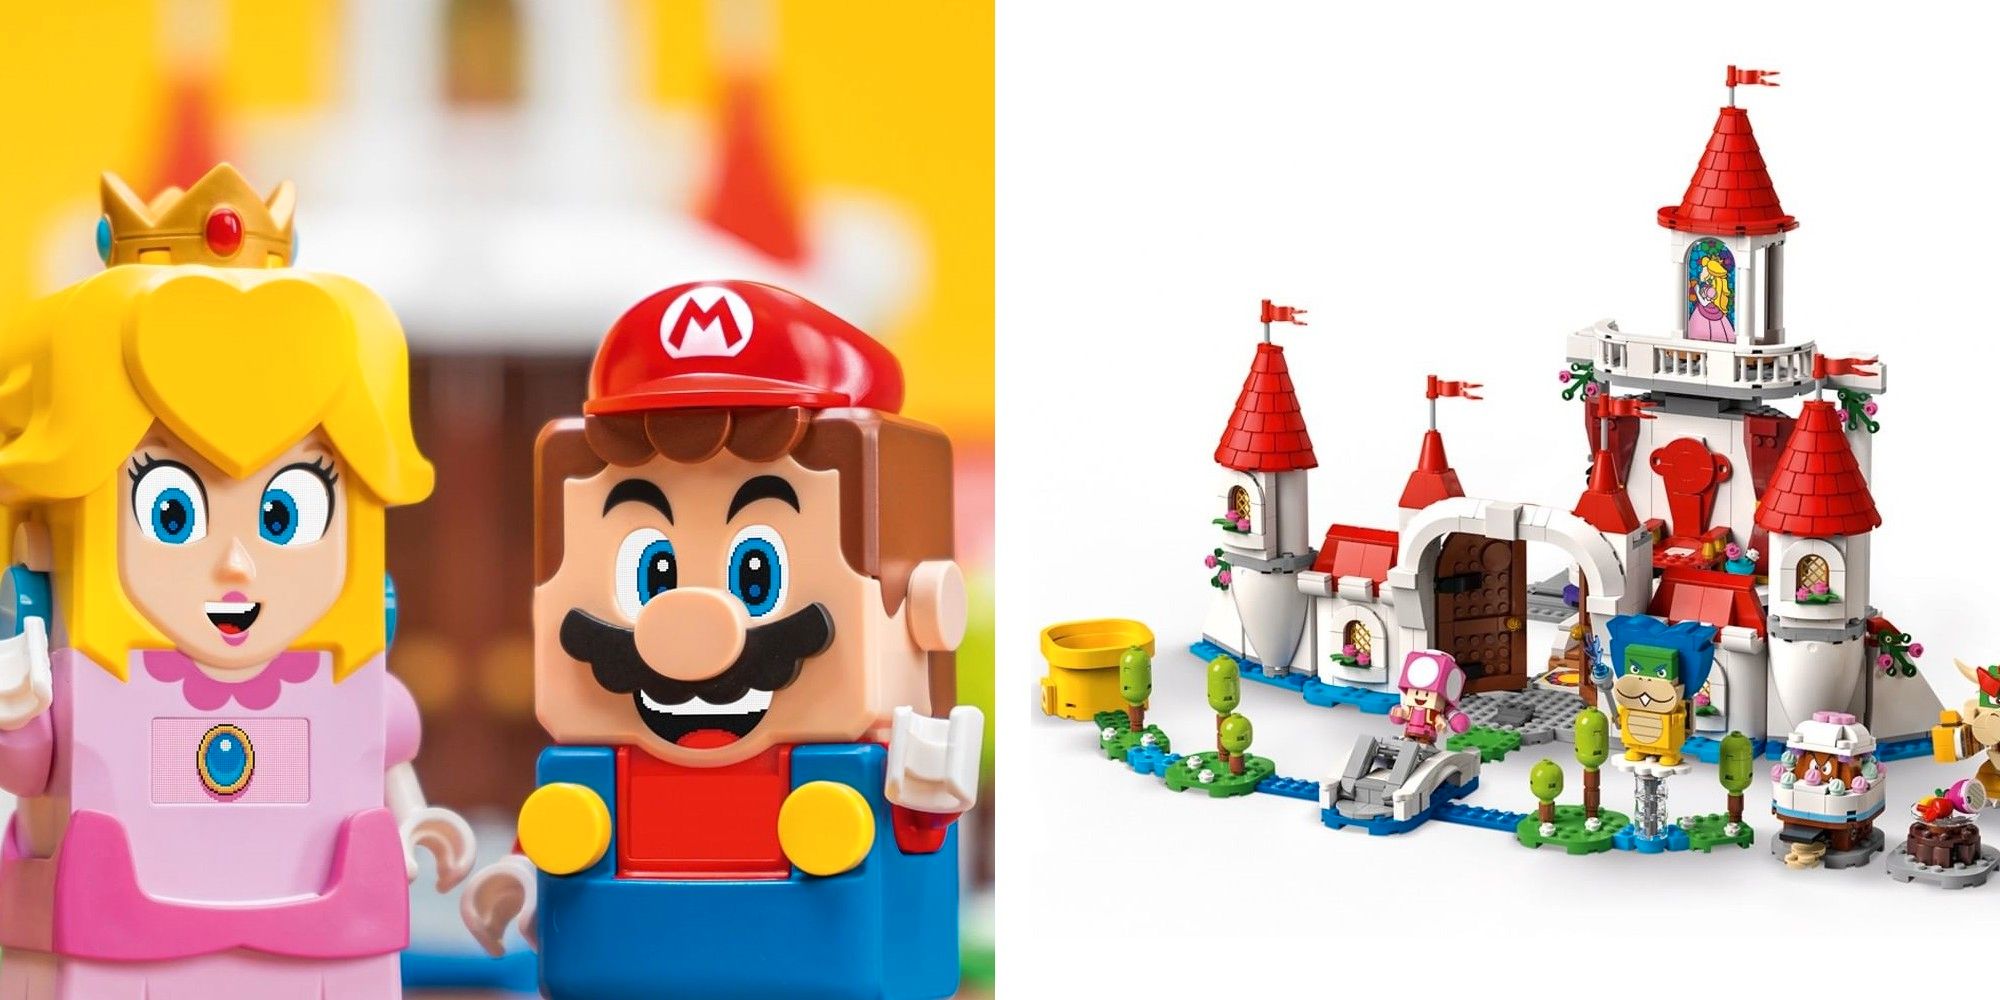 LEGO Princess Peach Set accidentalmente revelado antes del día de Mario